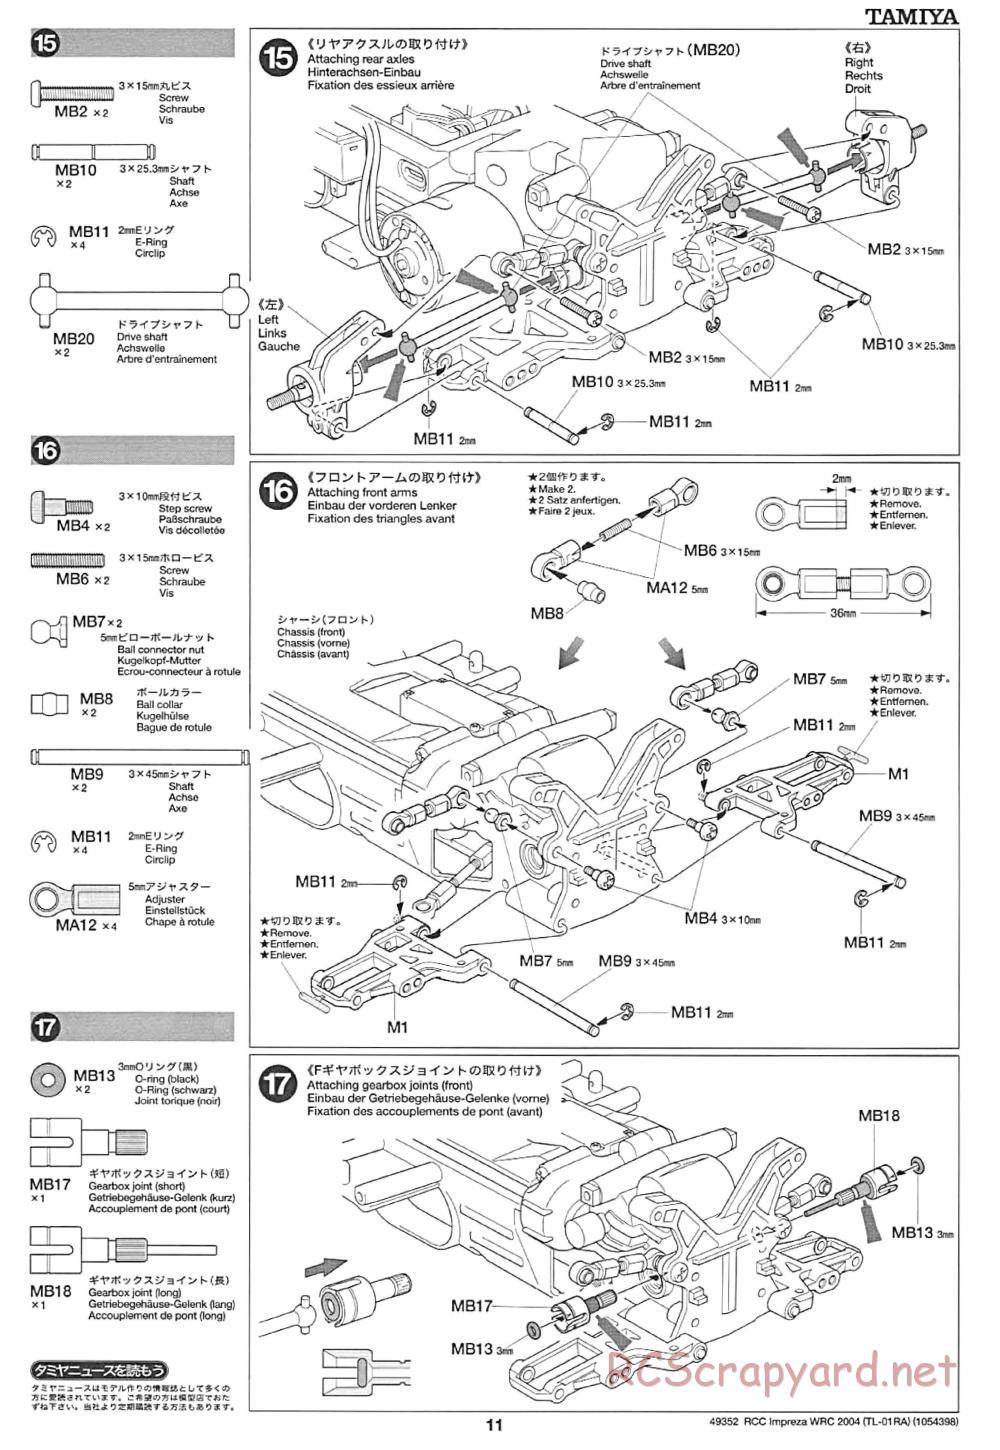 Tamiya - Subaru Impreza WRC 2004 Chassis - Manual - Page 11